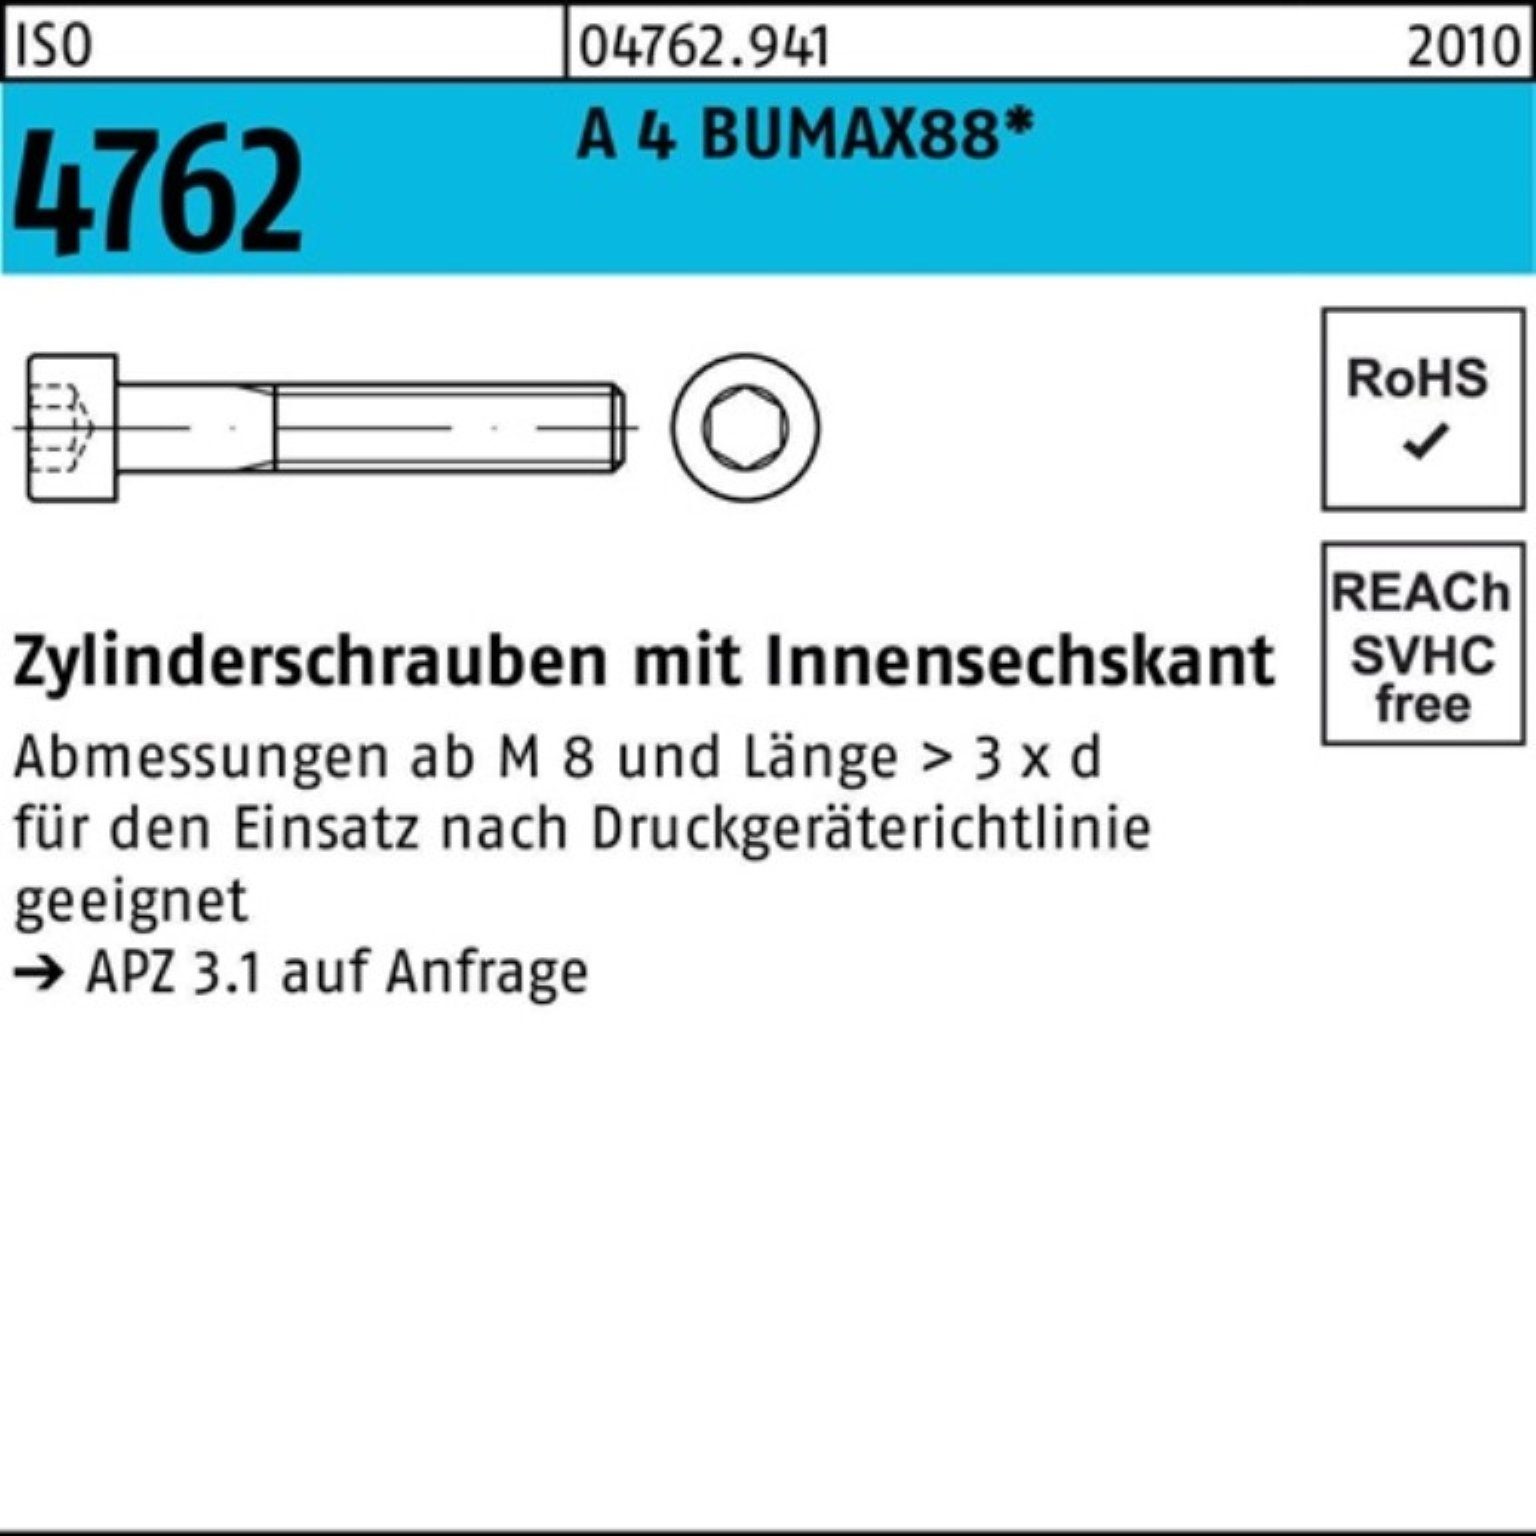 12 M4x 4 Bufab Innen-6kt A BUMAX88 200 4762 Zylinderschraube 200er Zylinderschraube ISO Pack